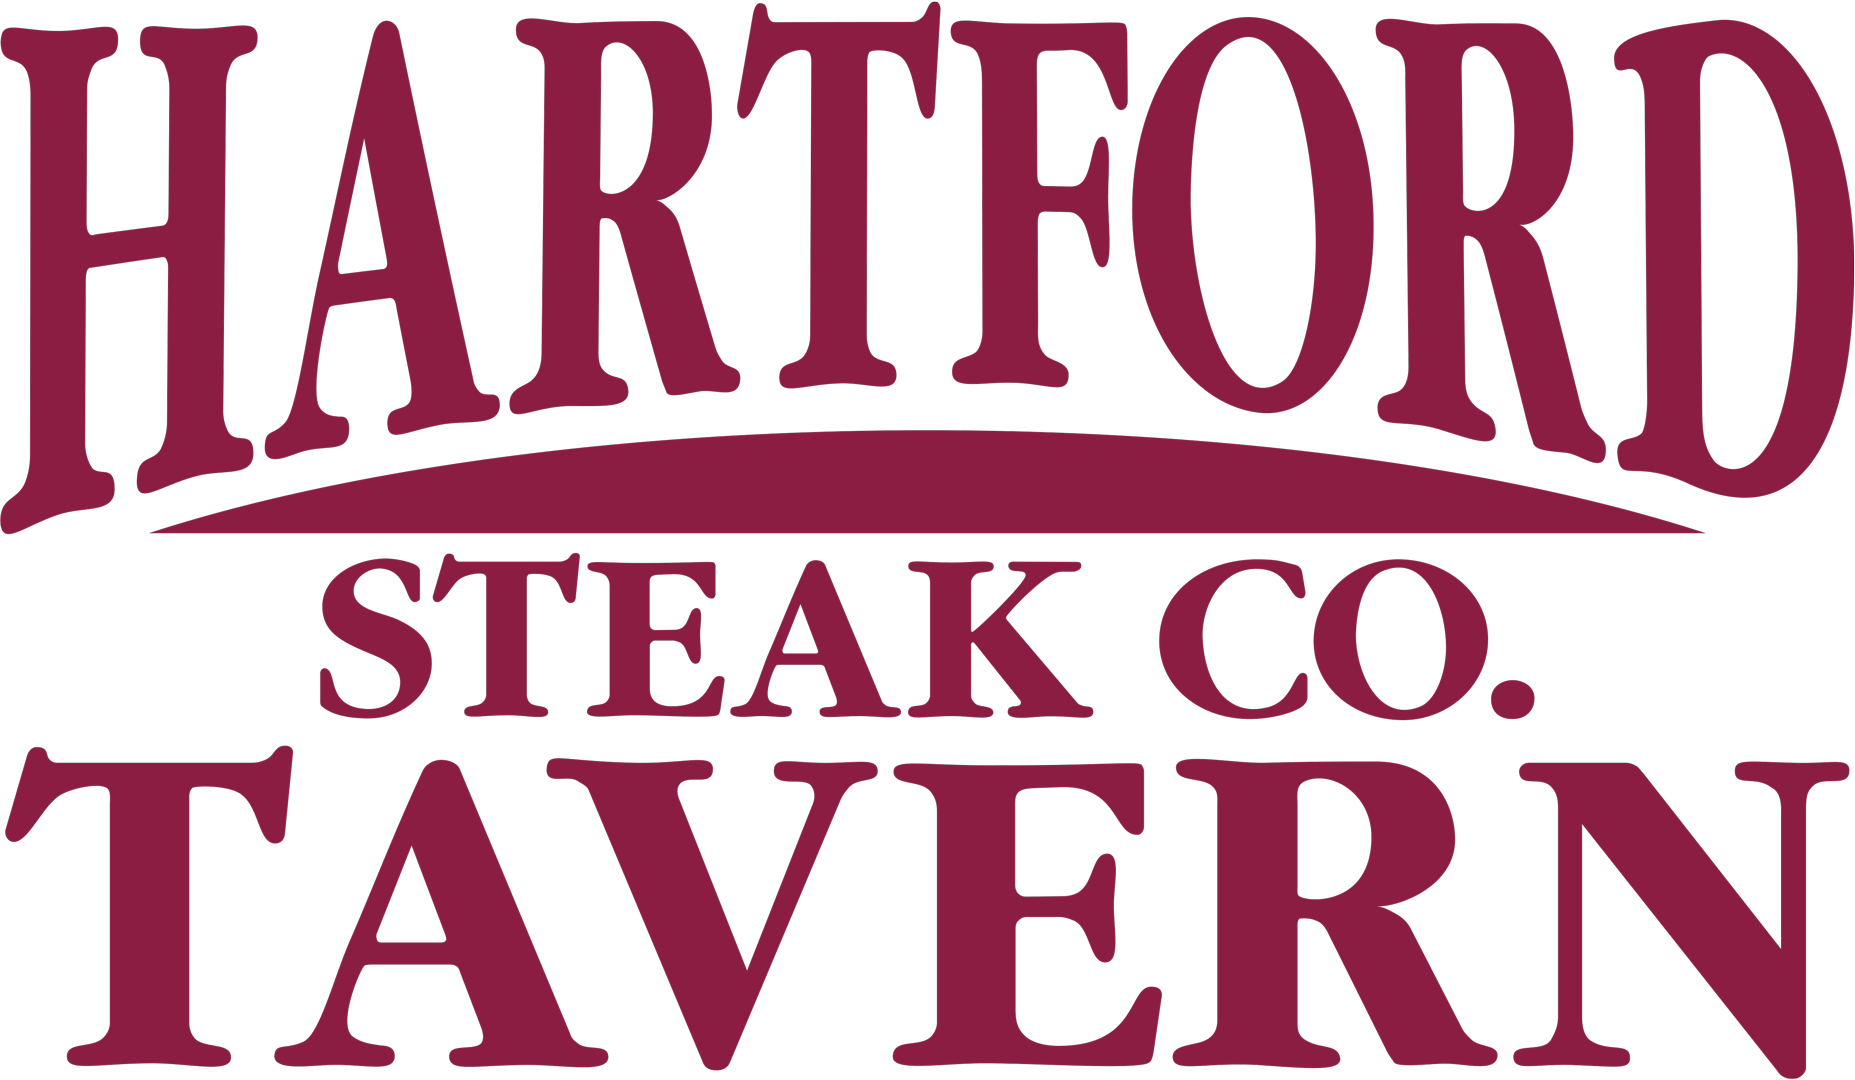 Hartford Steak Co. Tavern